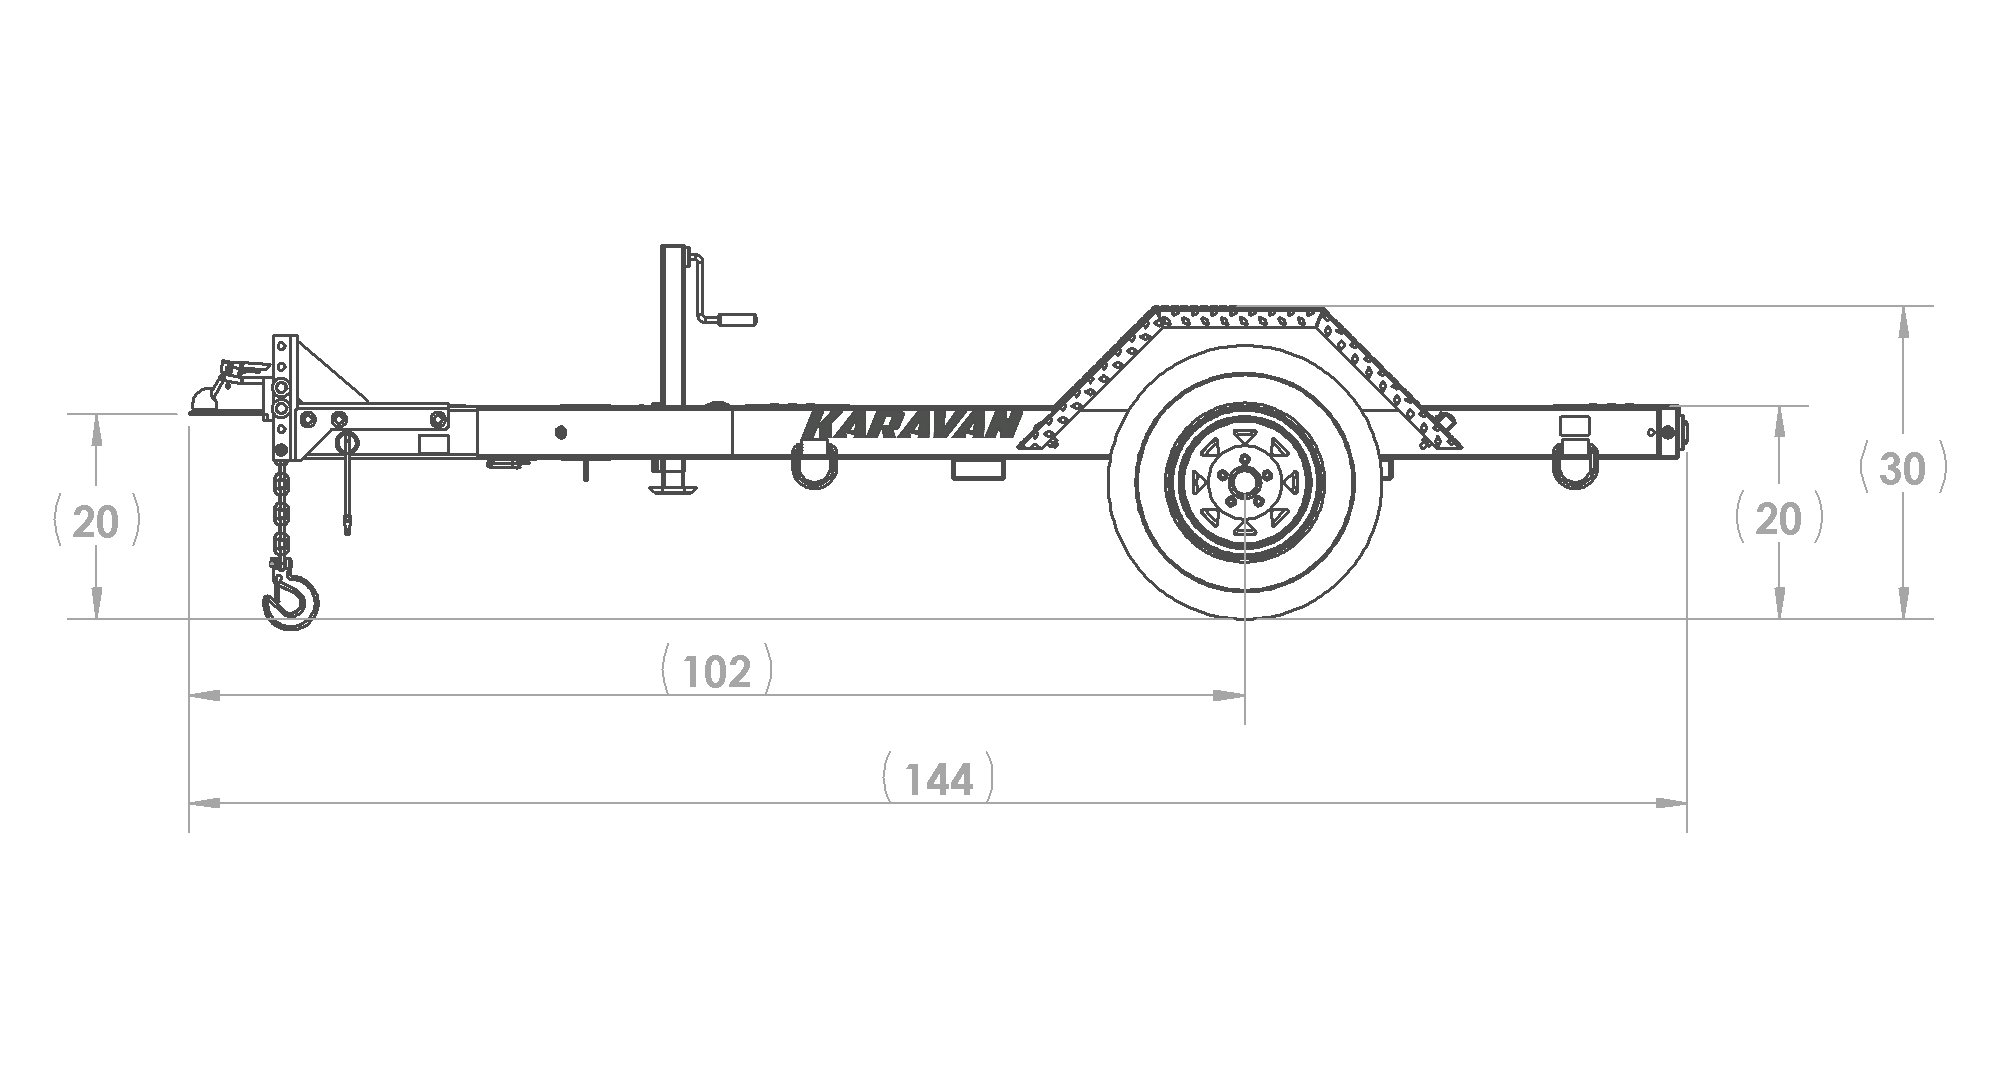 Karavan Trailer's 48 x 67 In. 3750# GVWR Industrial Trailer, model number WG-3750-EB-52, Side View Measurement